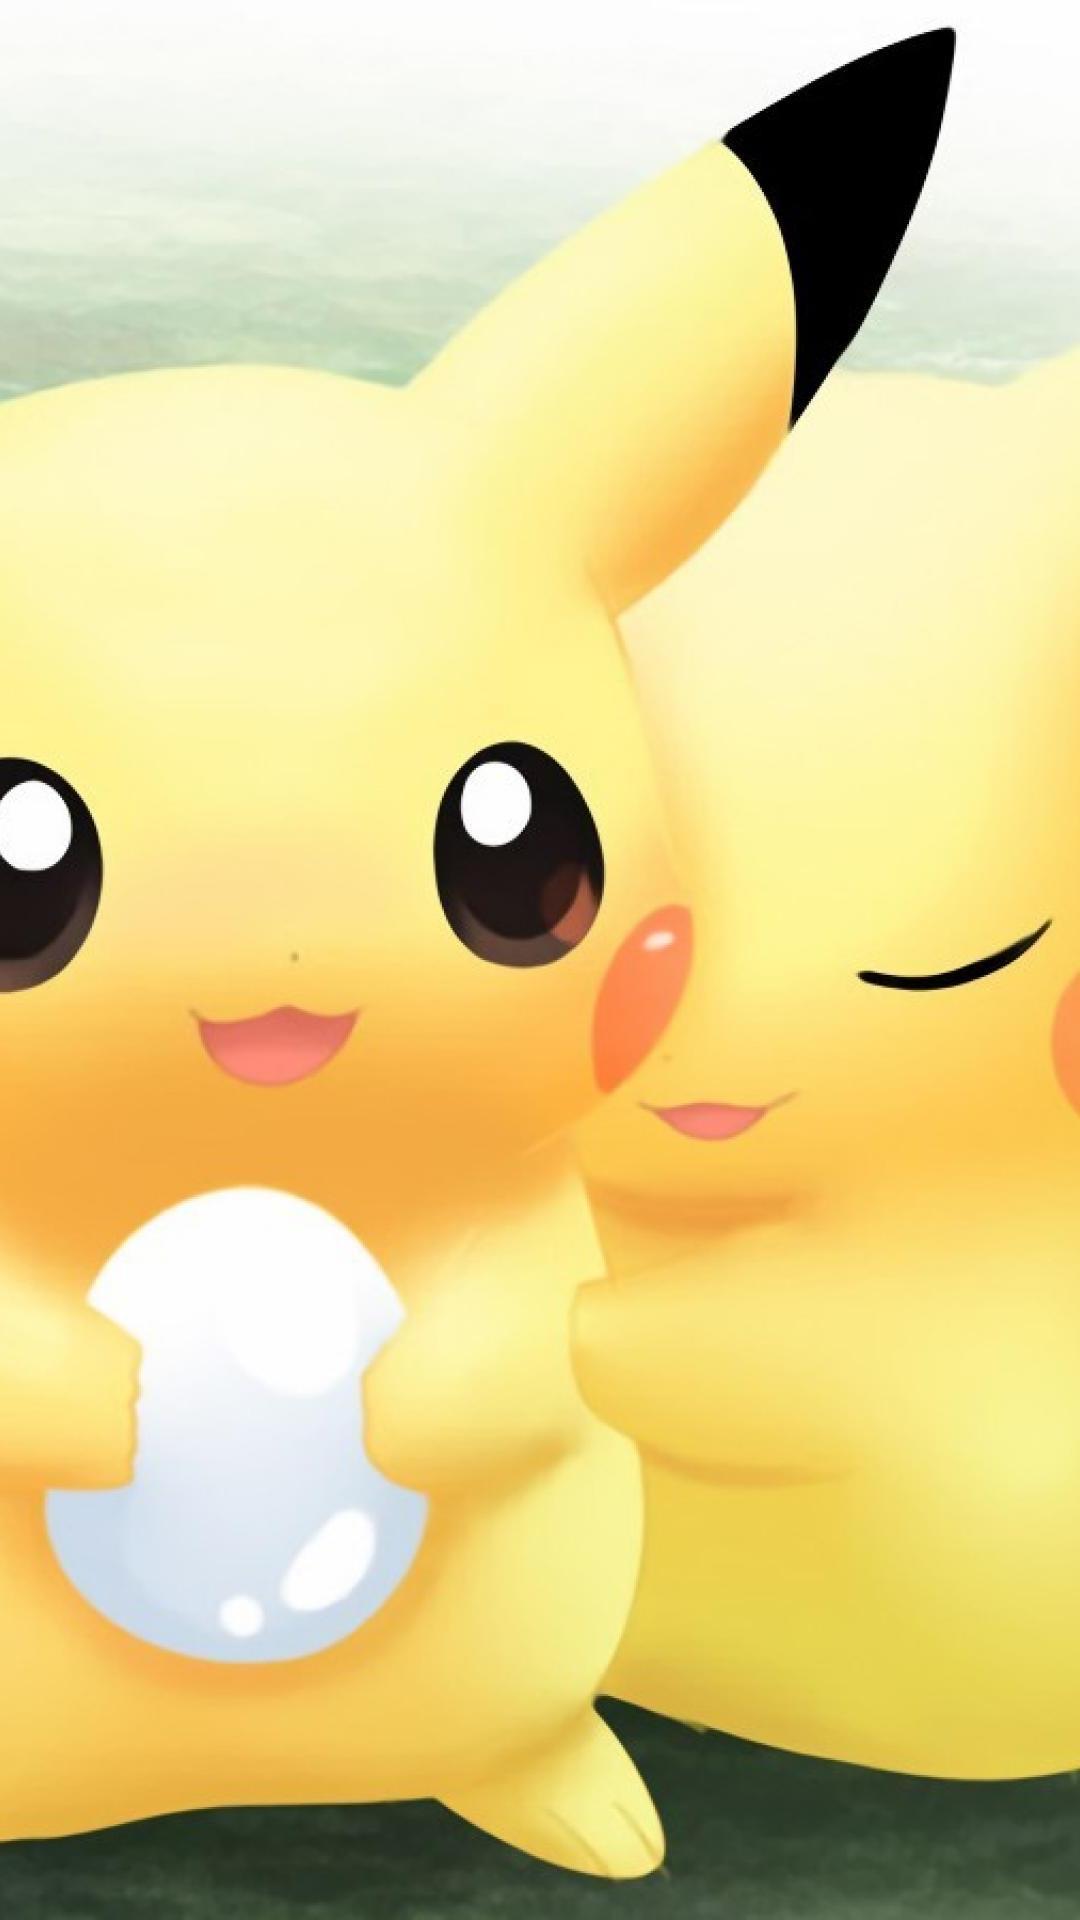 Pokemon Pikachu Love Girly Love iPhone 6 Plus 1080×1920 Wallpaper 1